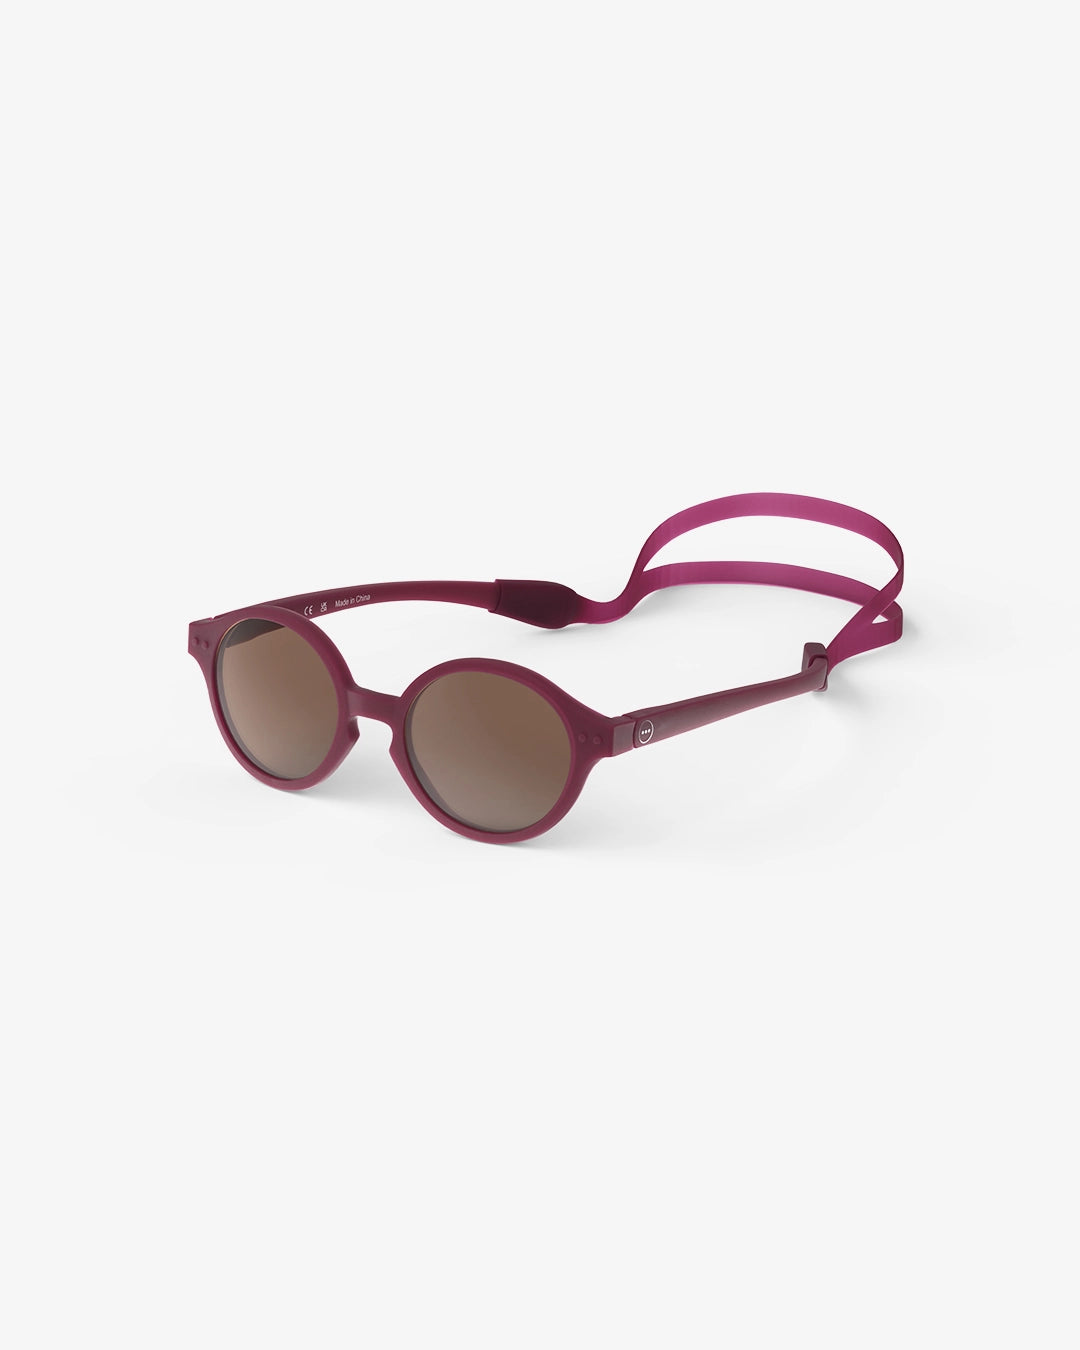 Sun Kids 9-36 months #D - Antique Purple - نظارات